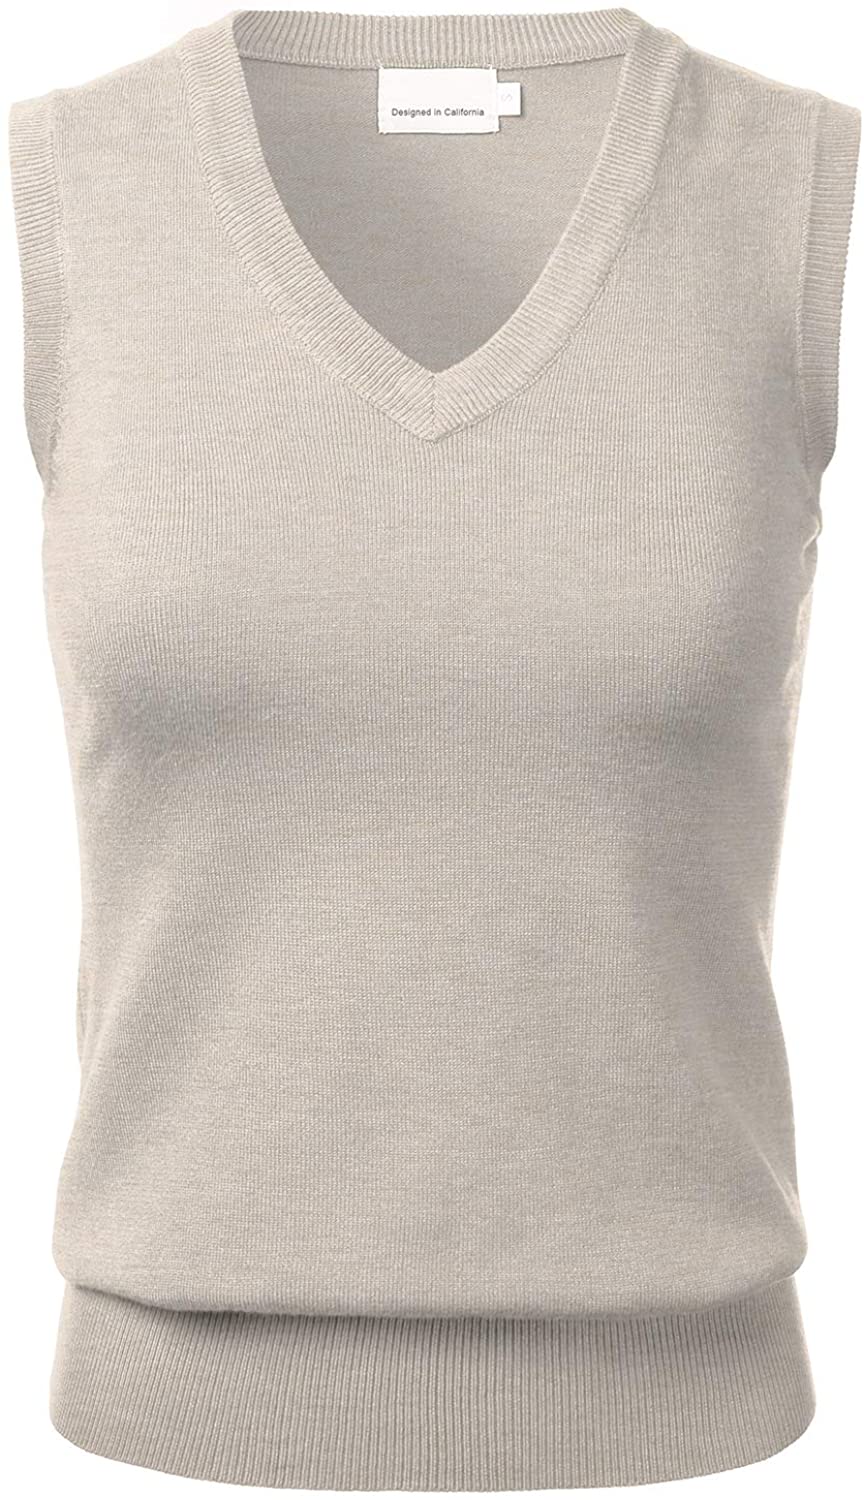 Women Solid Classic V-Neck Sleeveless Pullover Sweater Vest Top | eBay